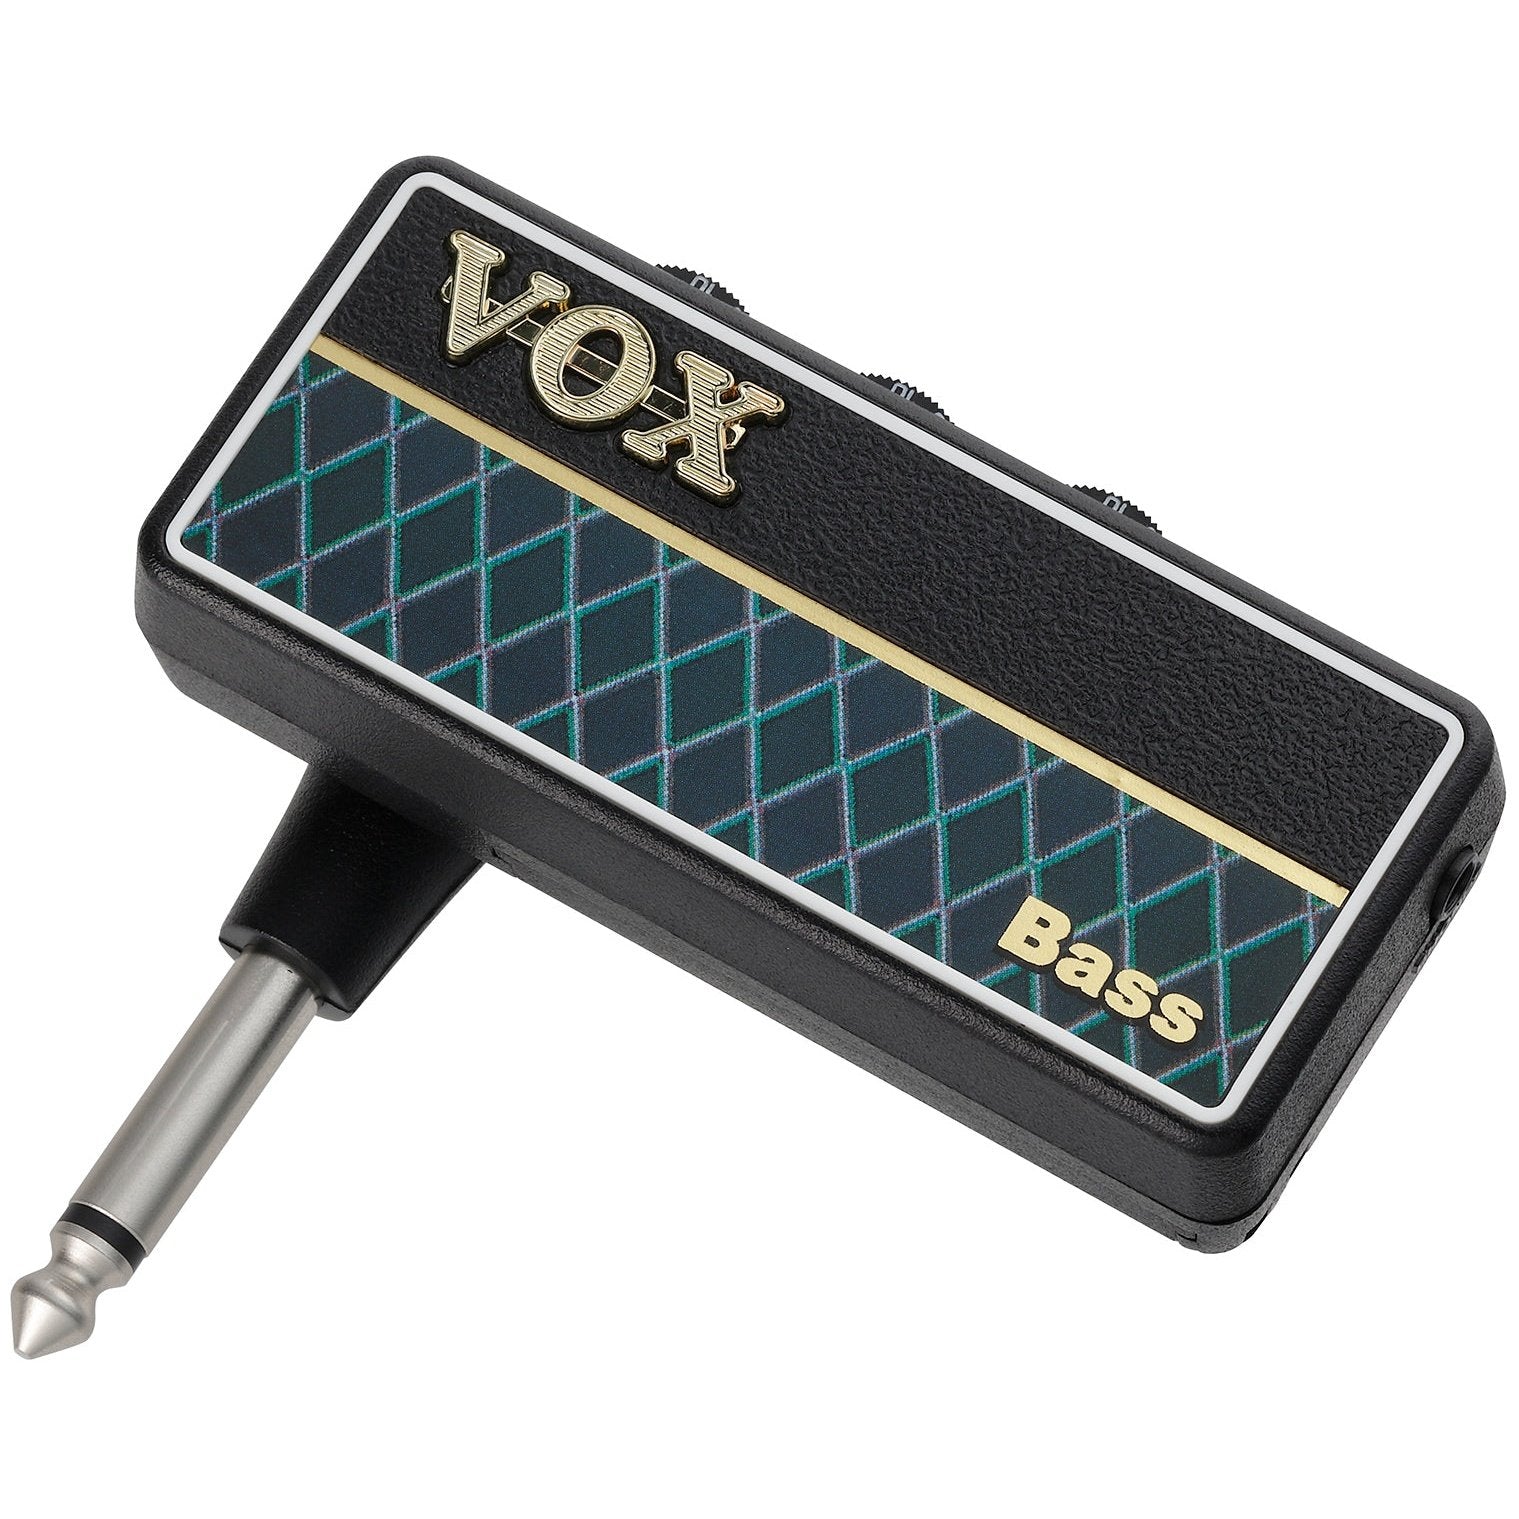 VOX amplug2 Bass - 器材